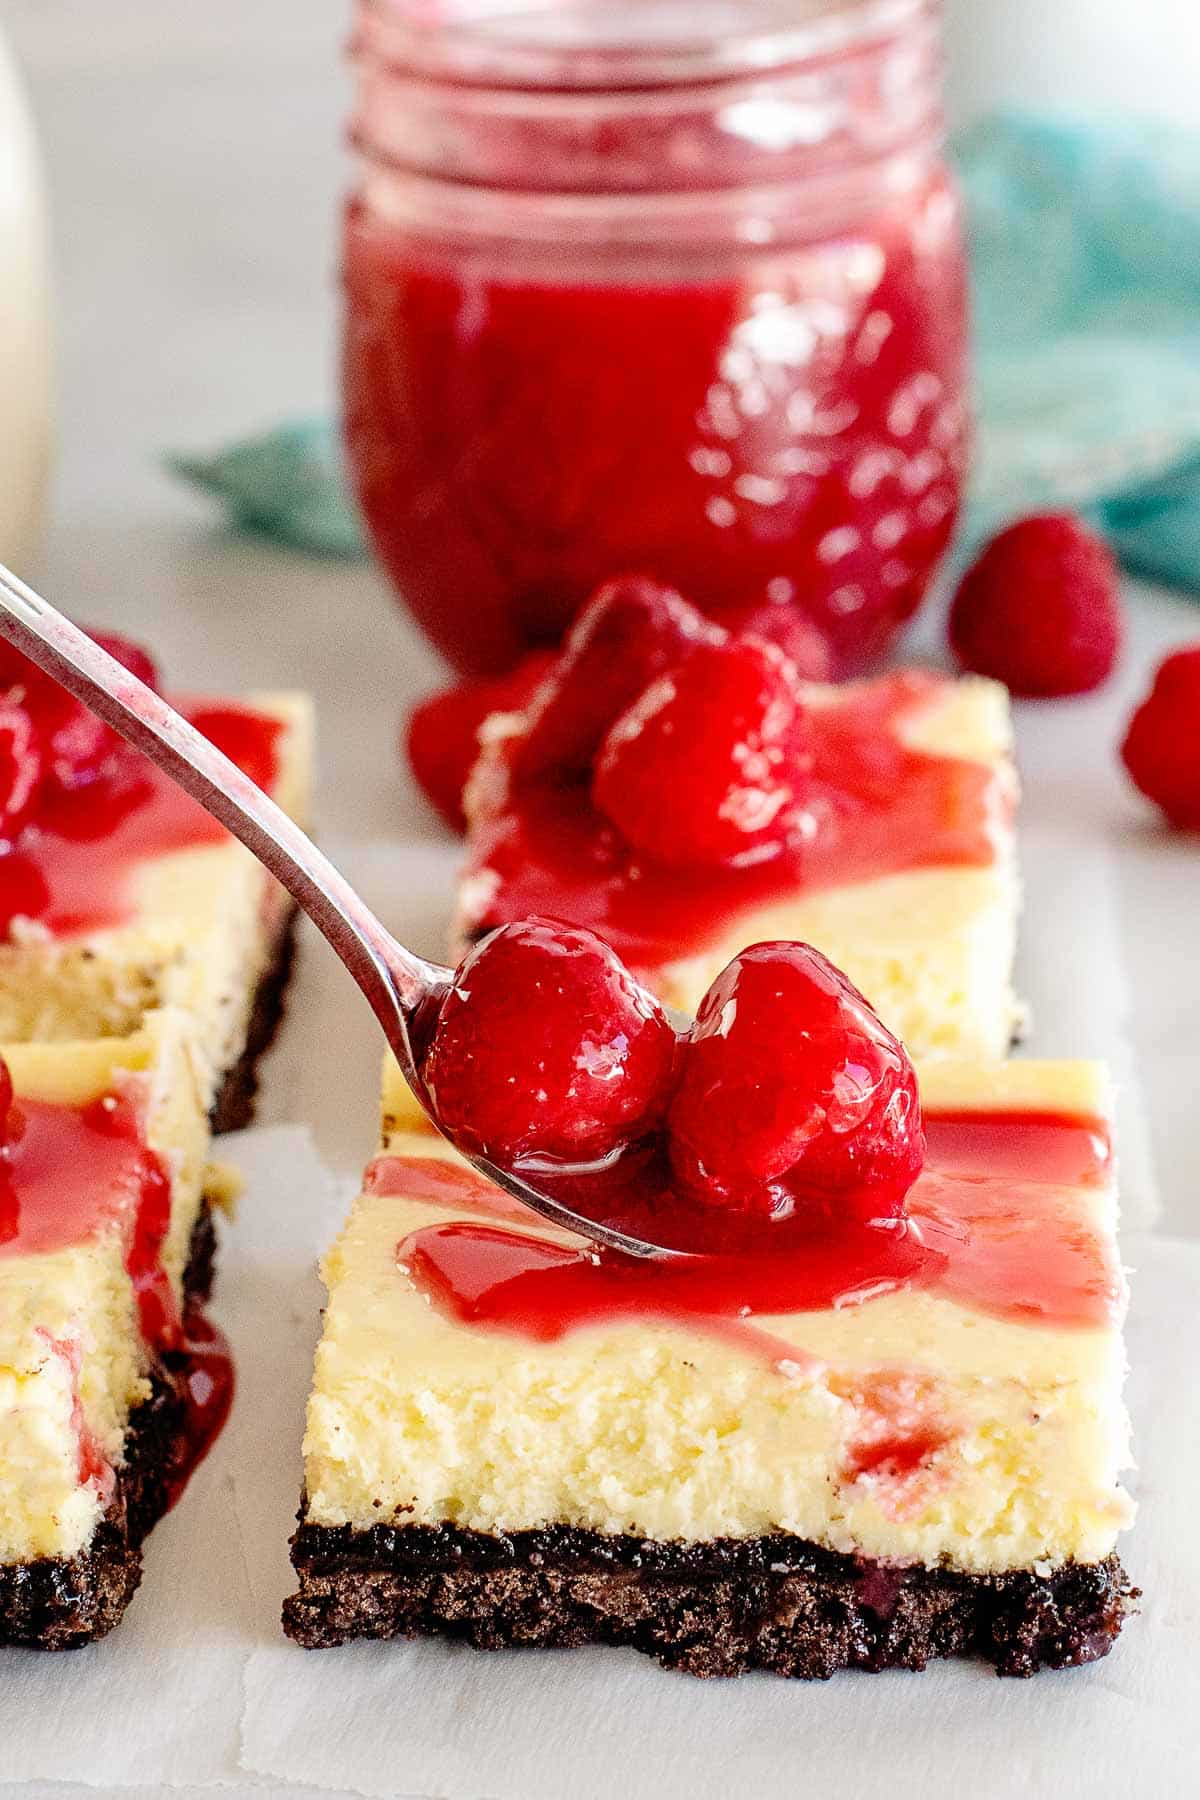 cheesecake bars with fresh raspberries on top.